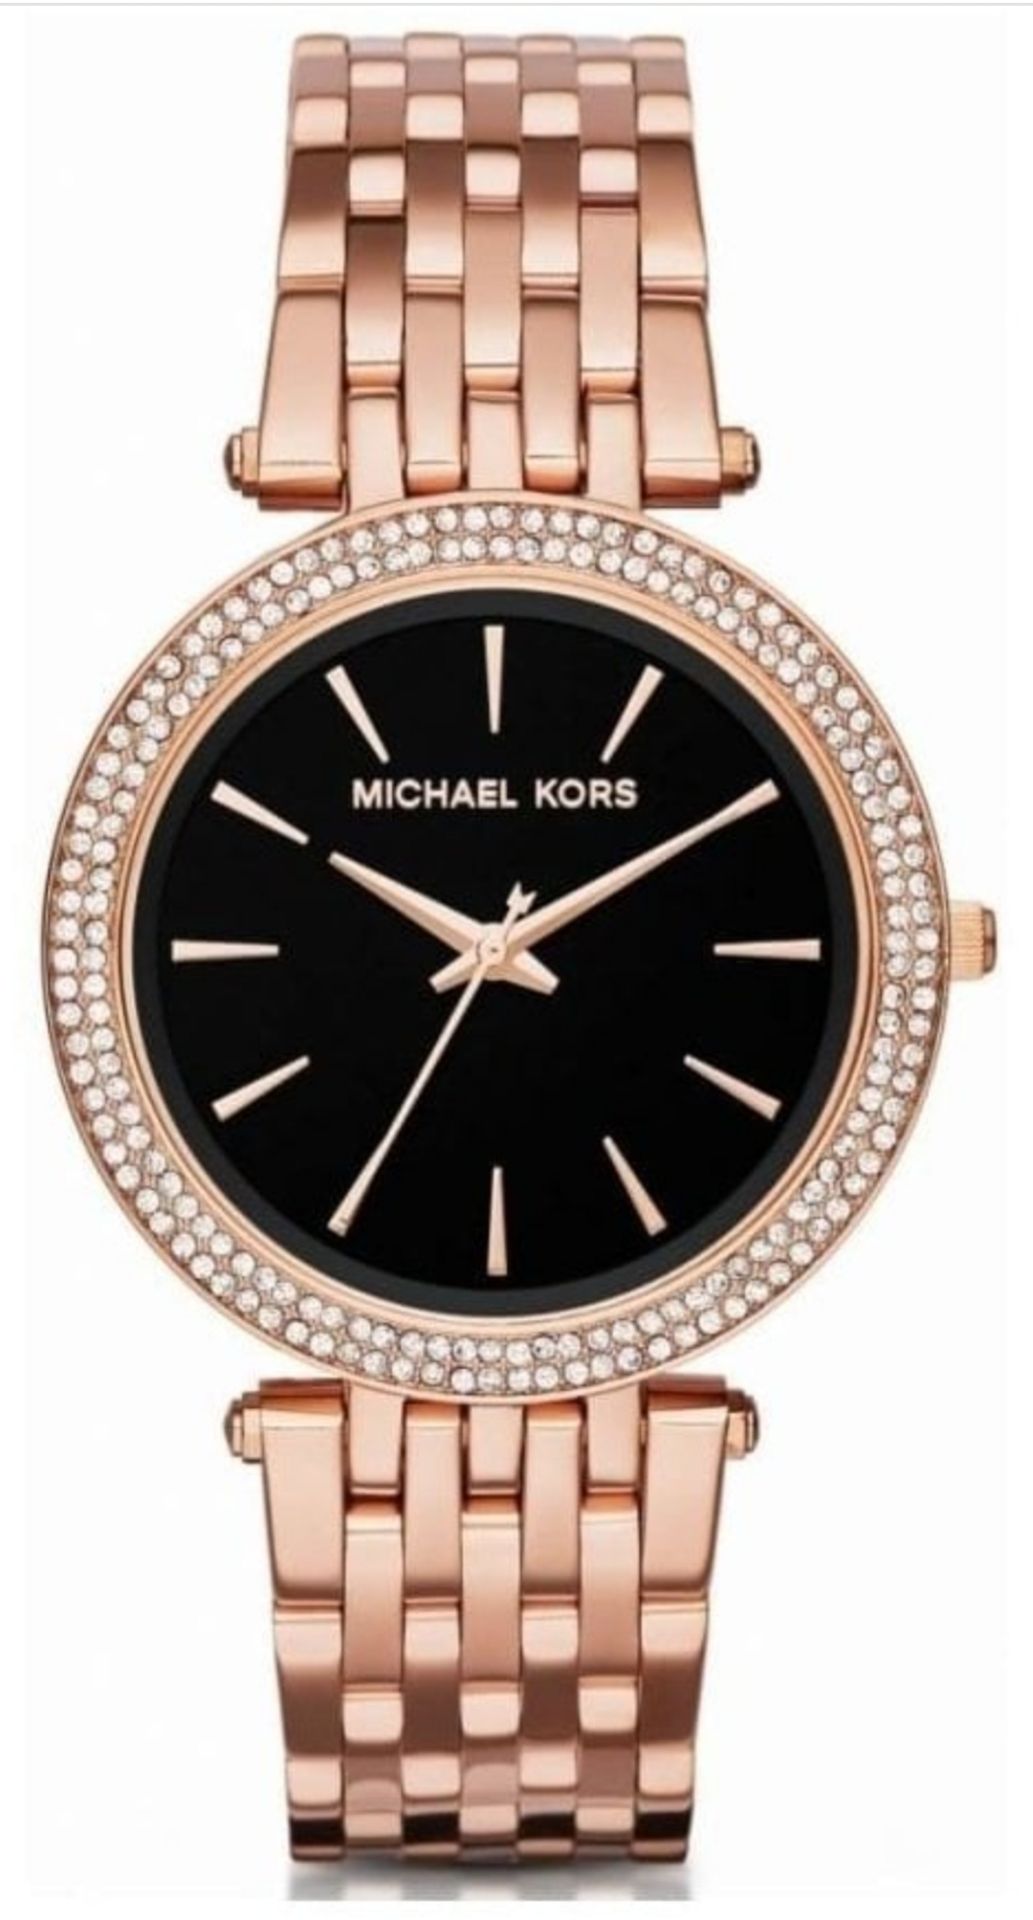 Michael Kors MK3402 Darci Black & Rose Gold Tone Stainless Steel Ladies Watch - Image 2 of 7